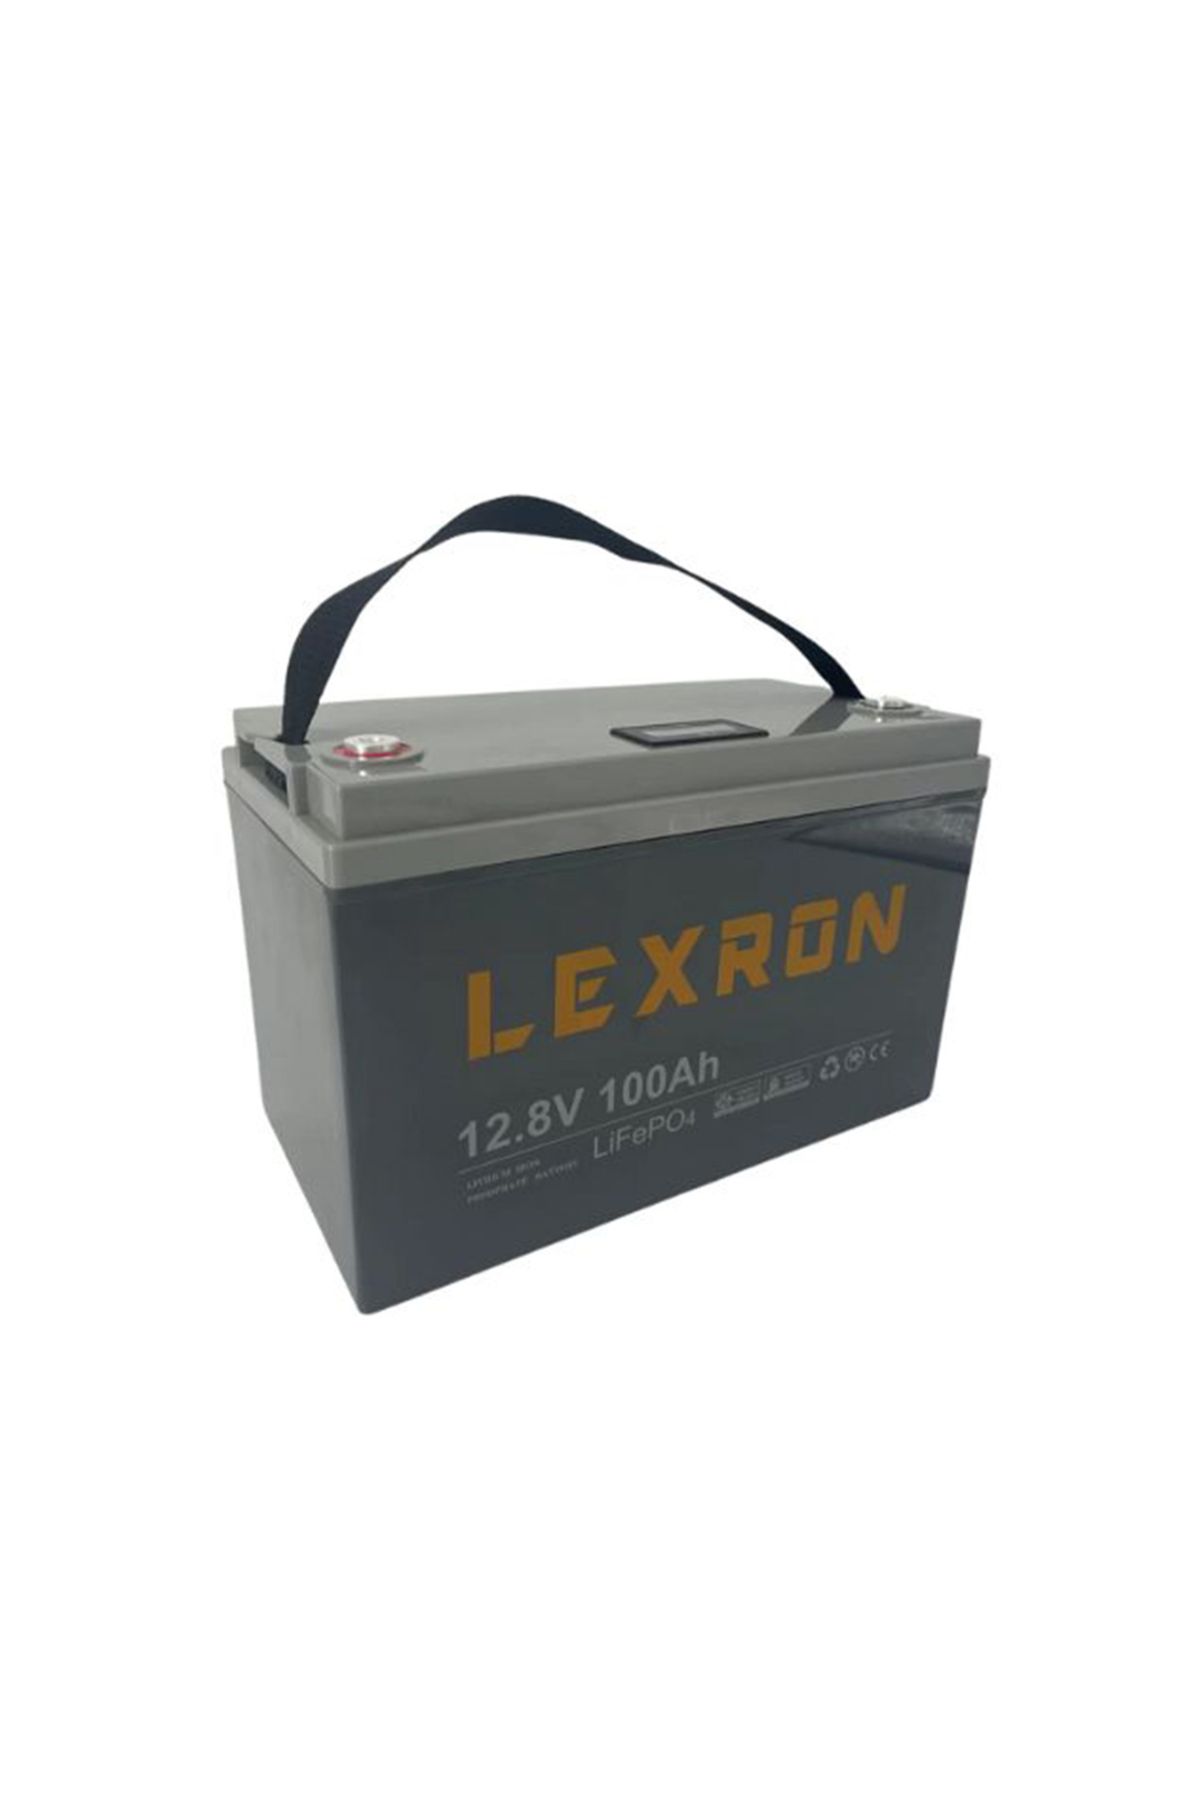 Lexron 48V 100AH LiFePO4 Lityum Akü